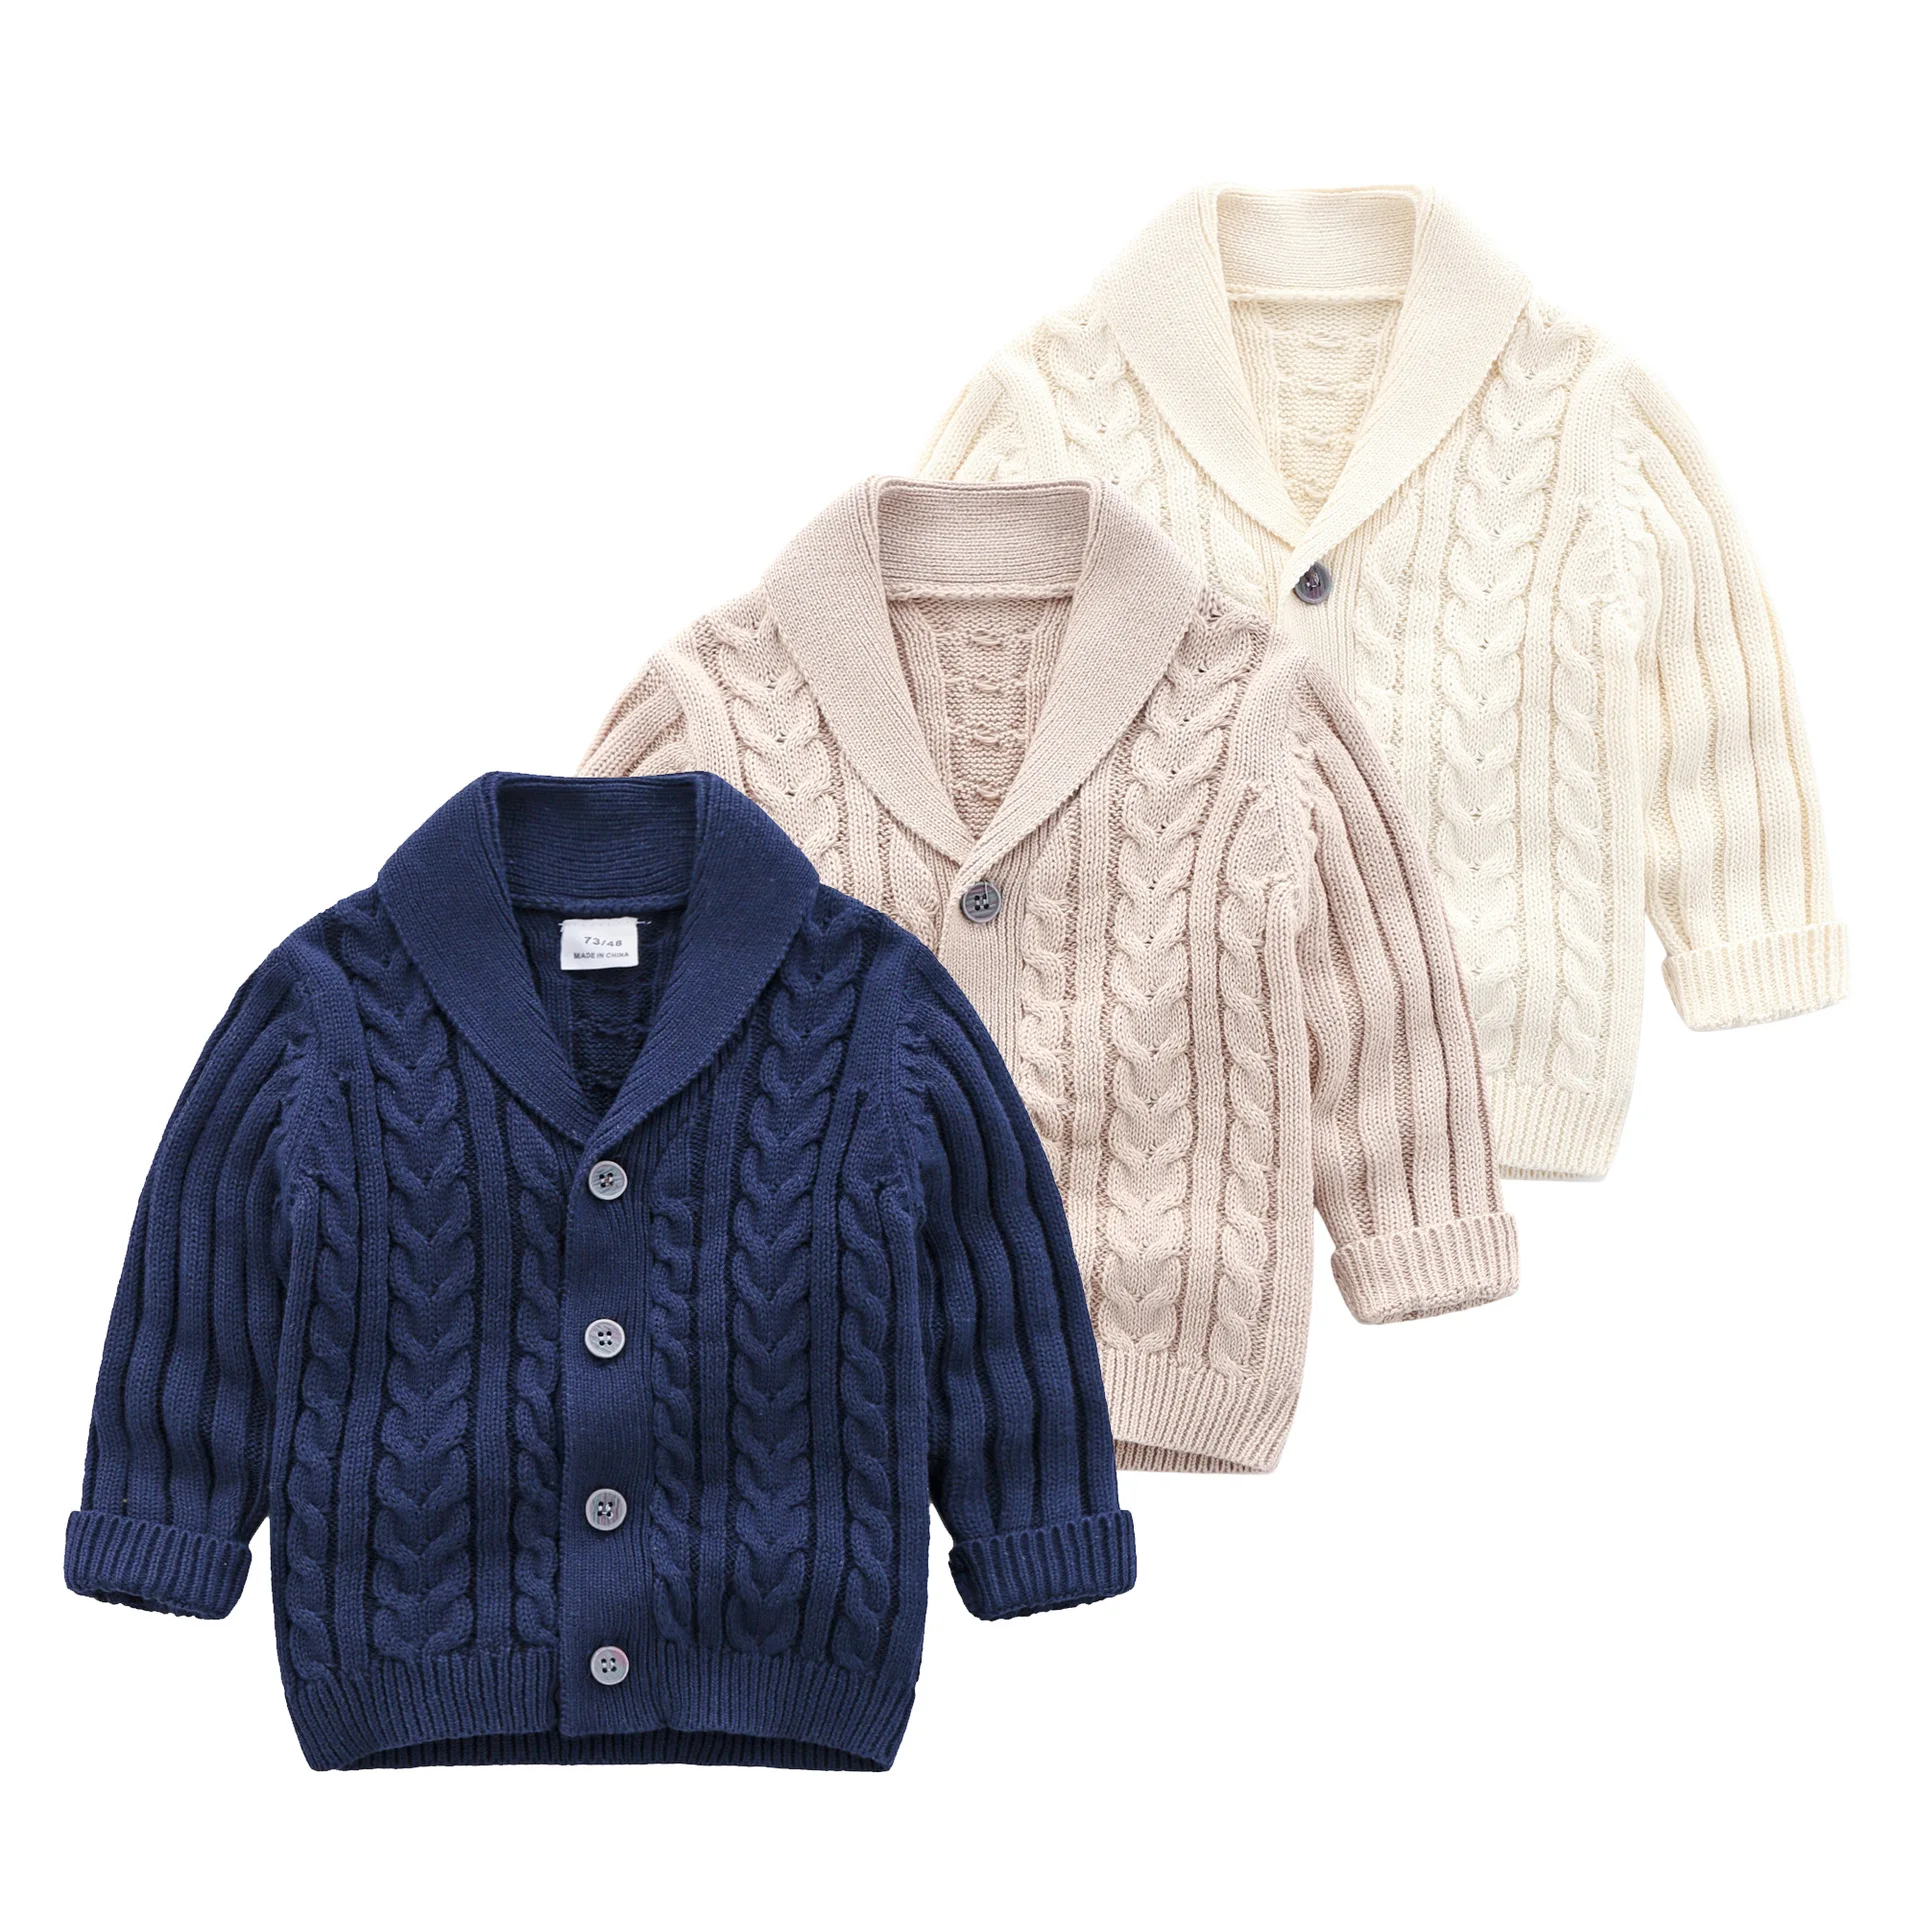 

New Born Baby Autumn Long Sleevd Sweater Infant Boys Fashion Cardigan Jacket 1-3 Years Olds Outwear Soft Warm Casual Coat